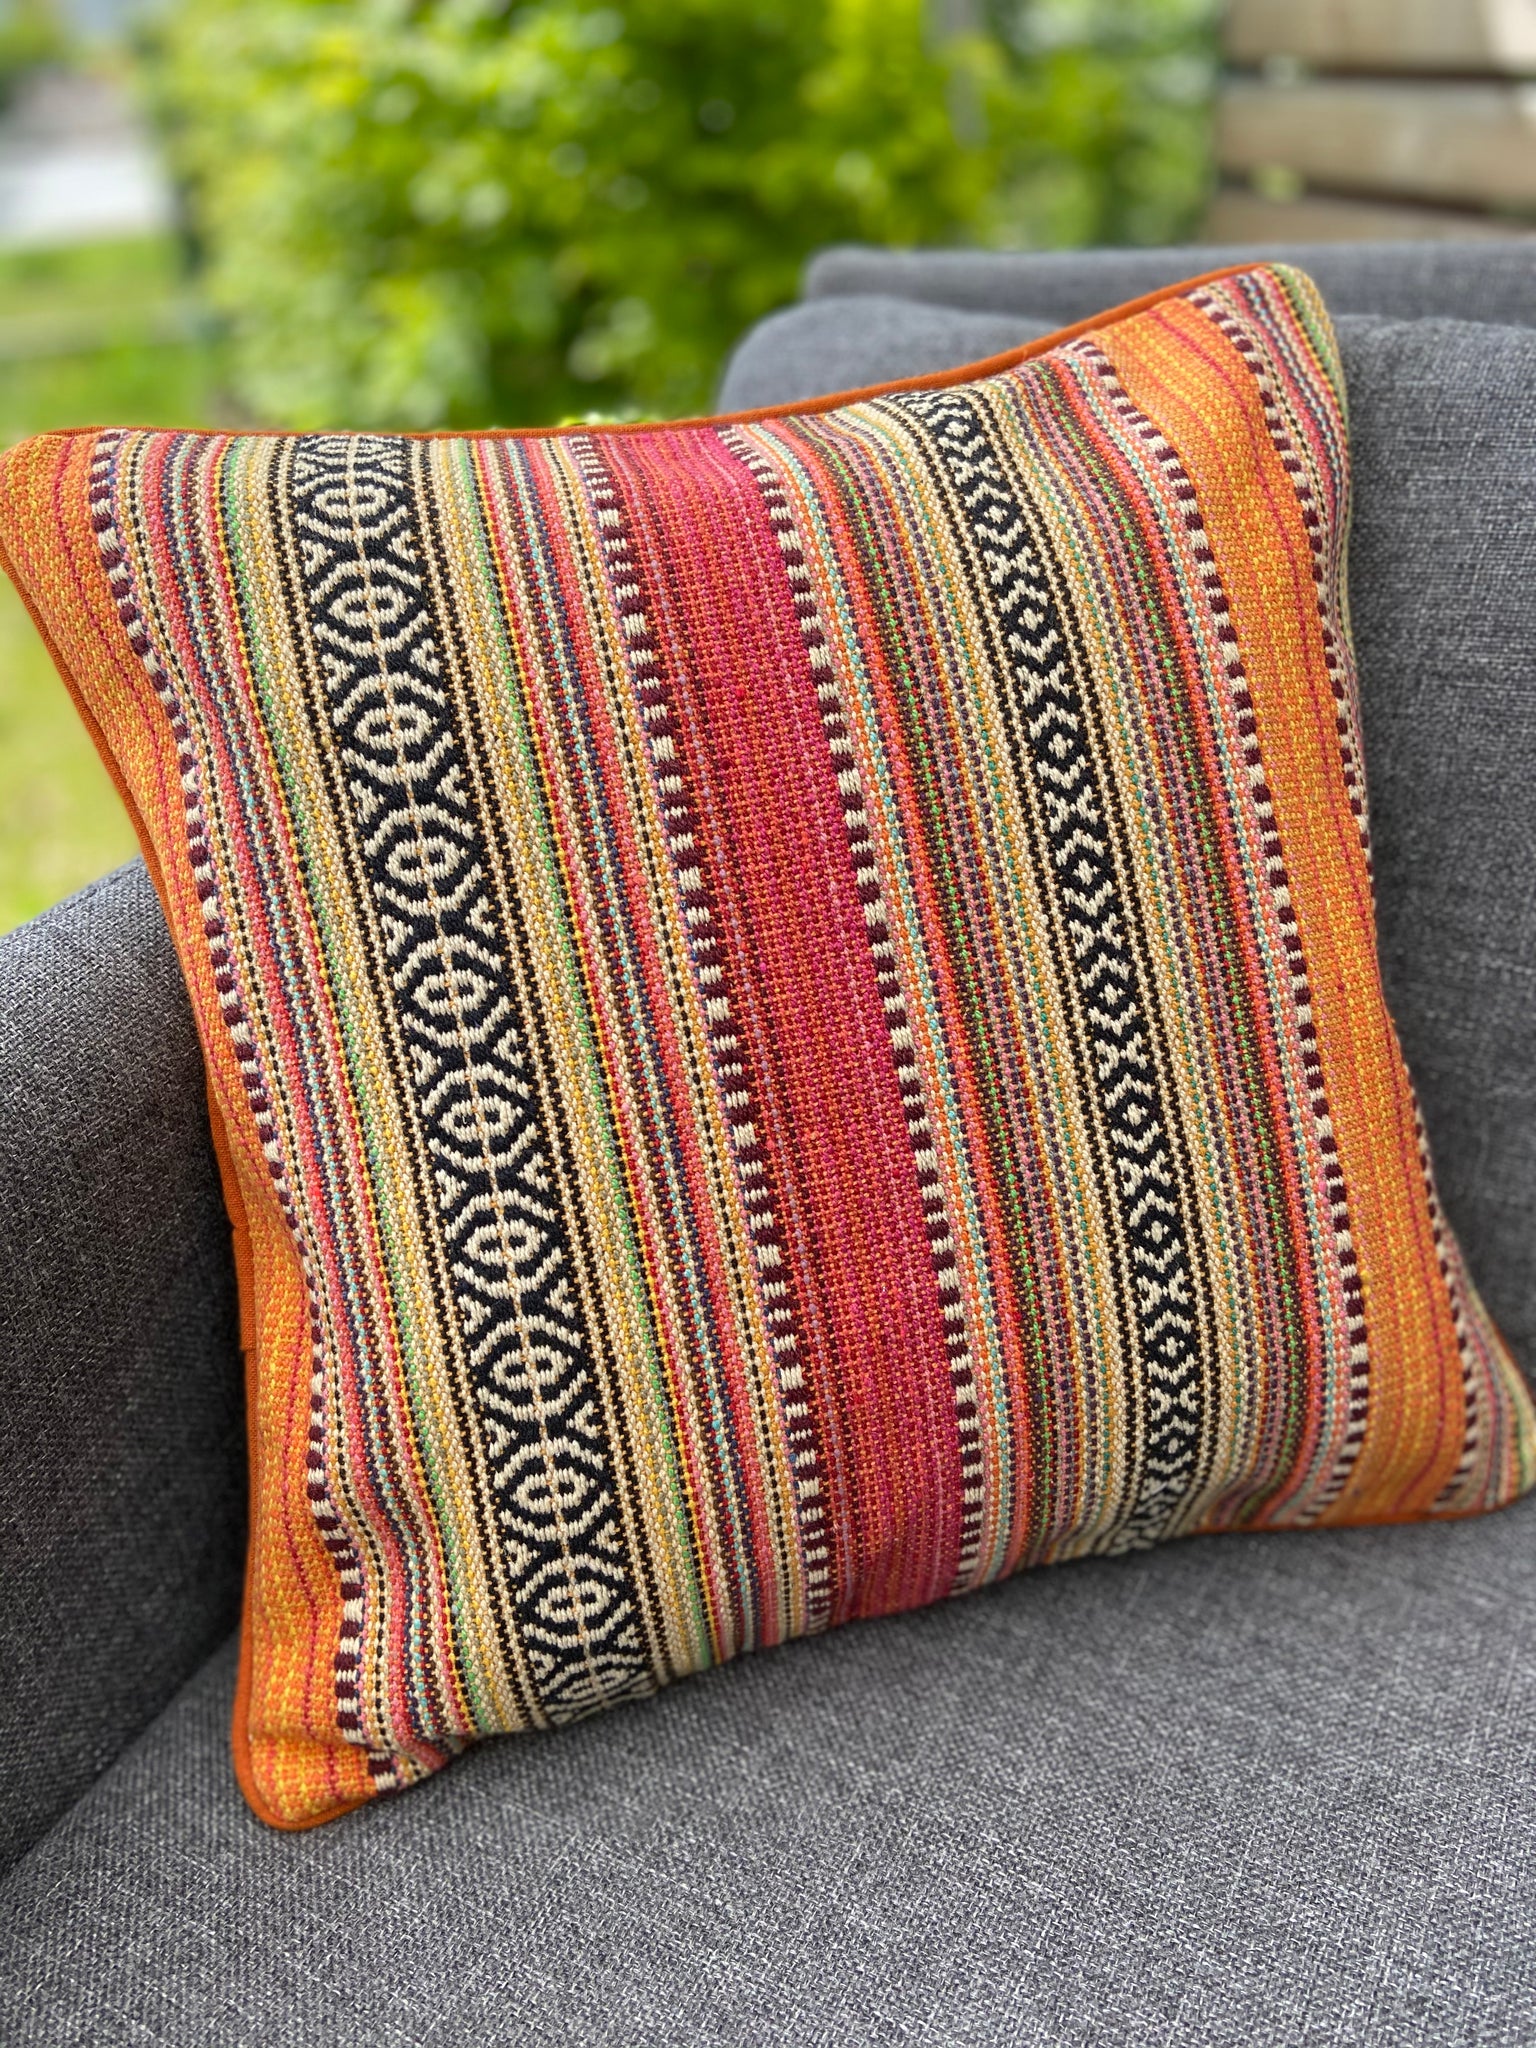 Cushion Cover-border stripes pattern3 in orange